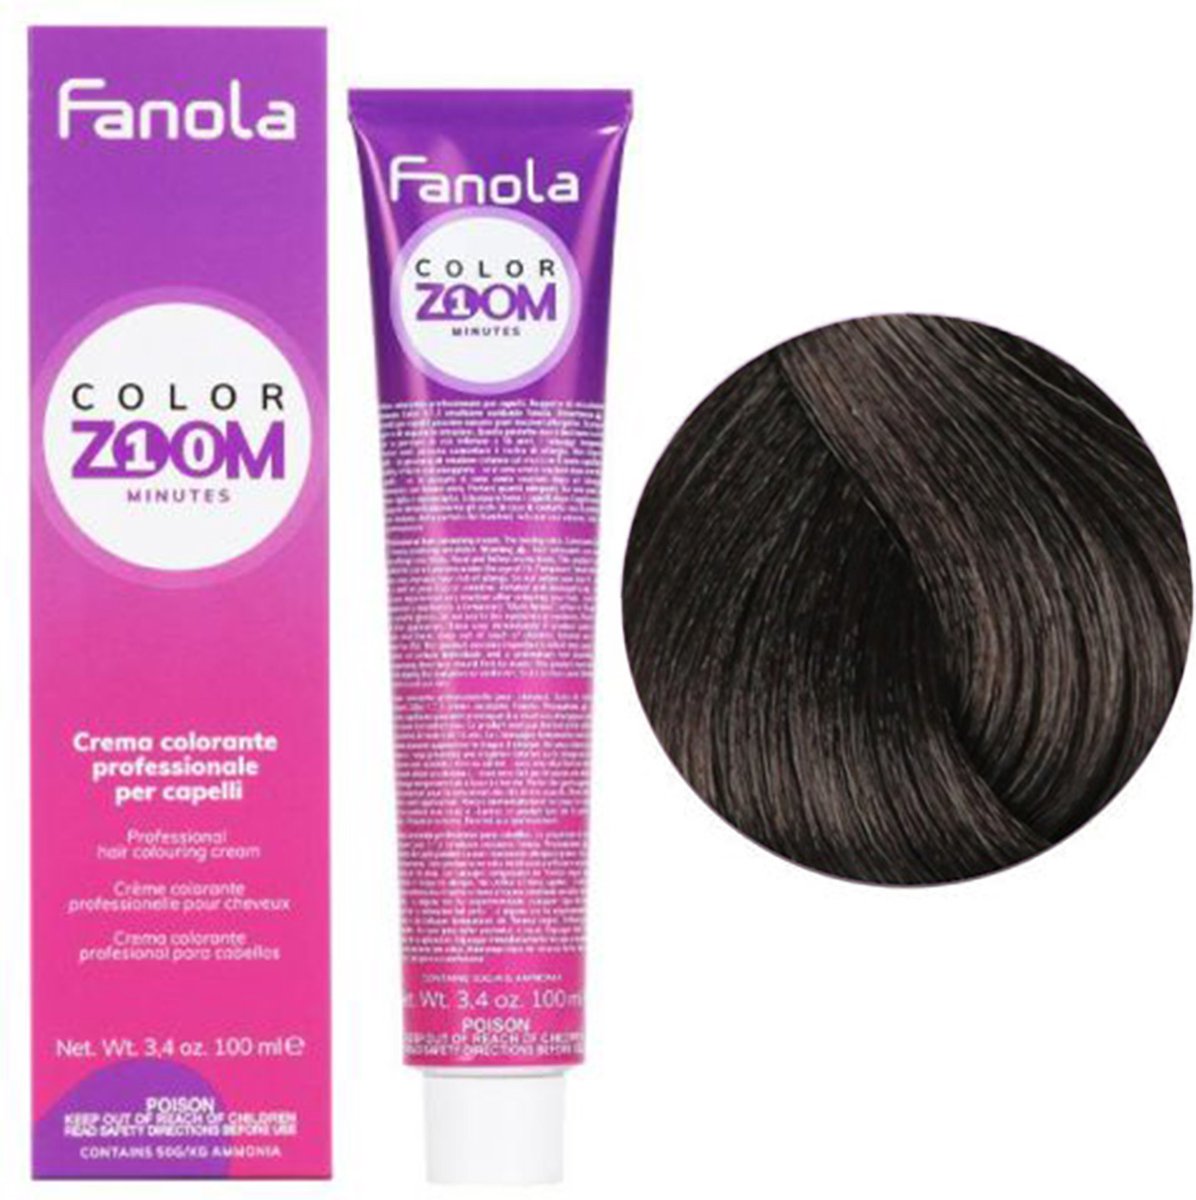 Fanola - Color Zoom - 100 ml - 6.71